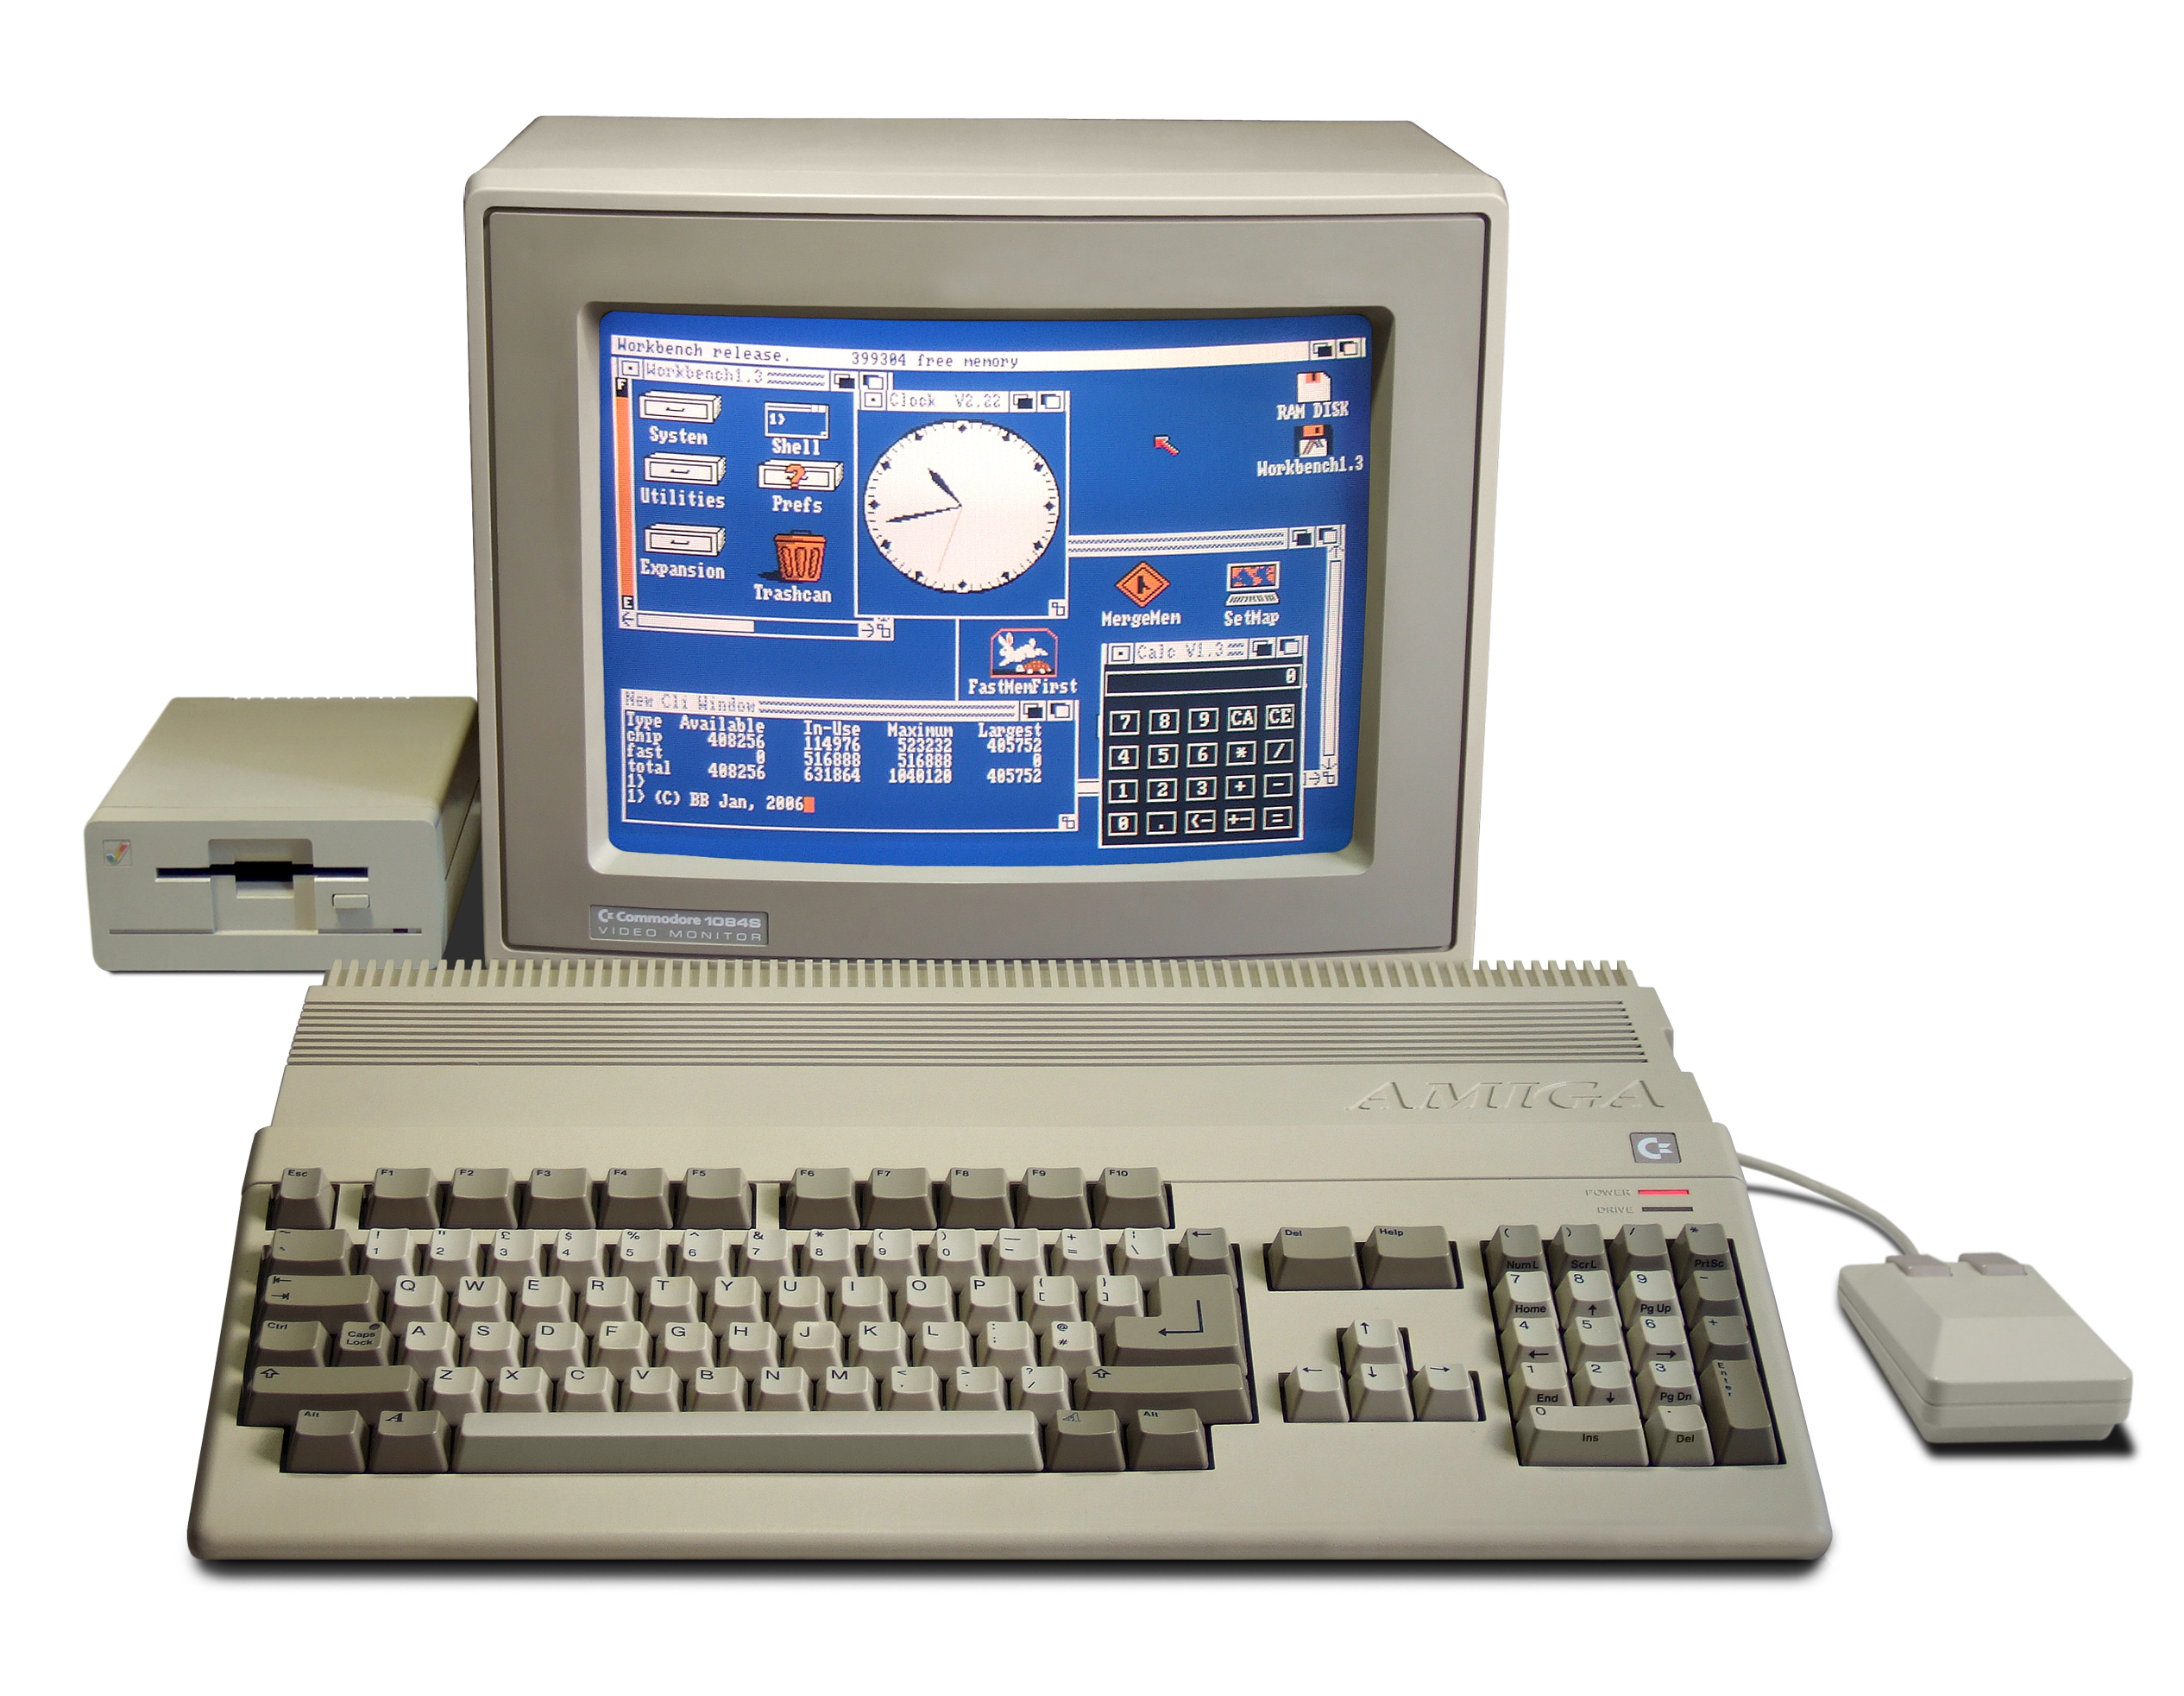 Amiga A500. Image © Bill Bertram 2006.